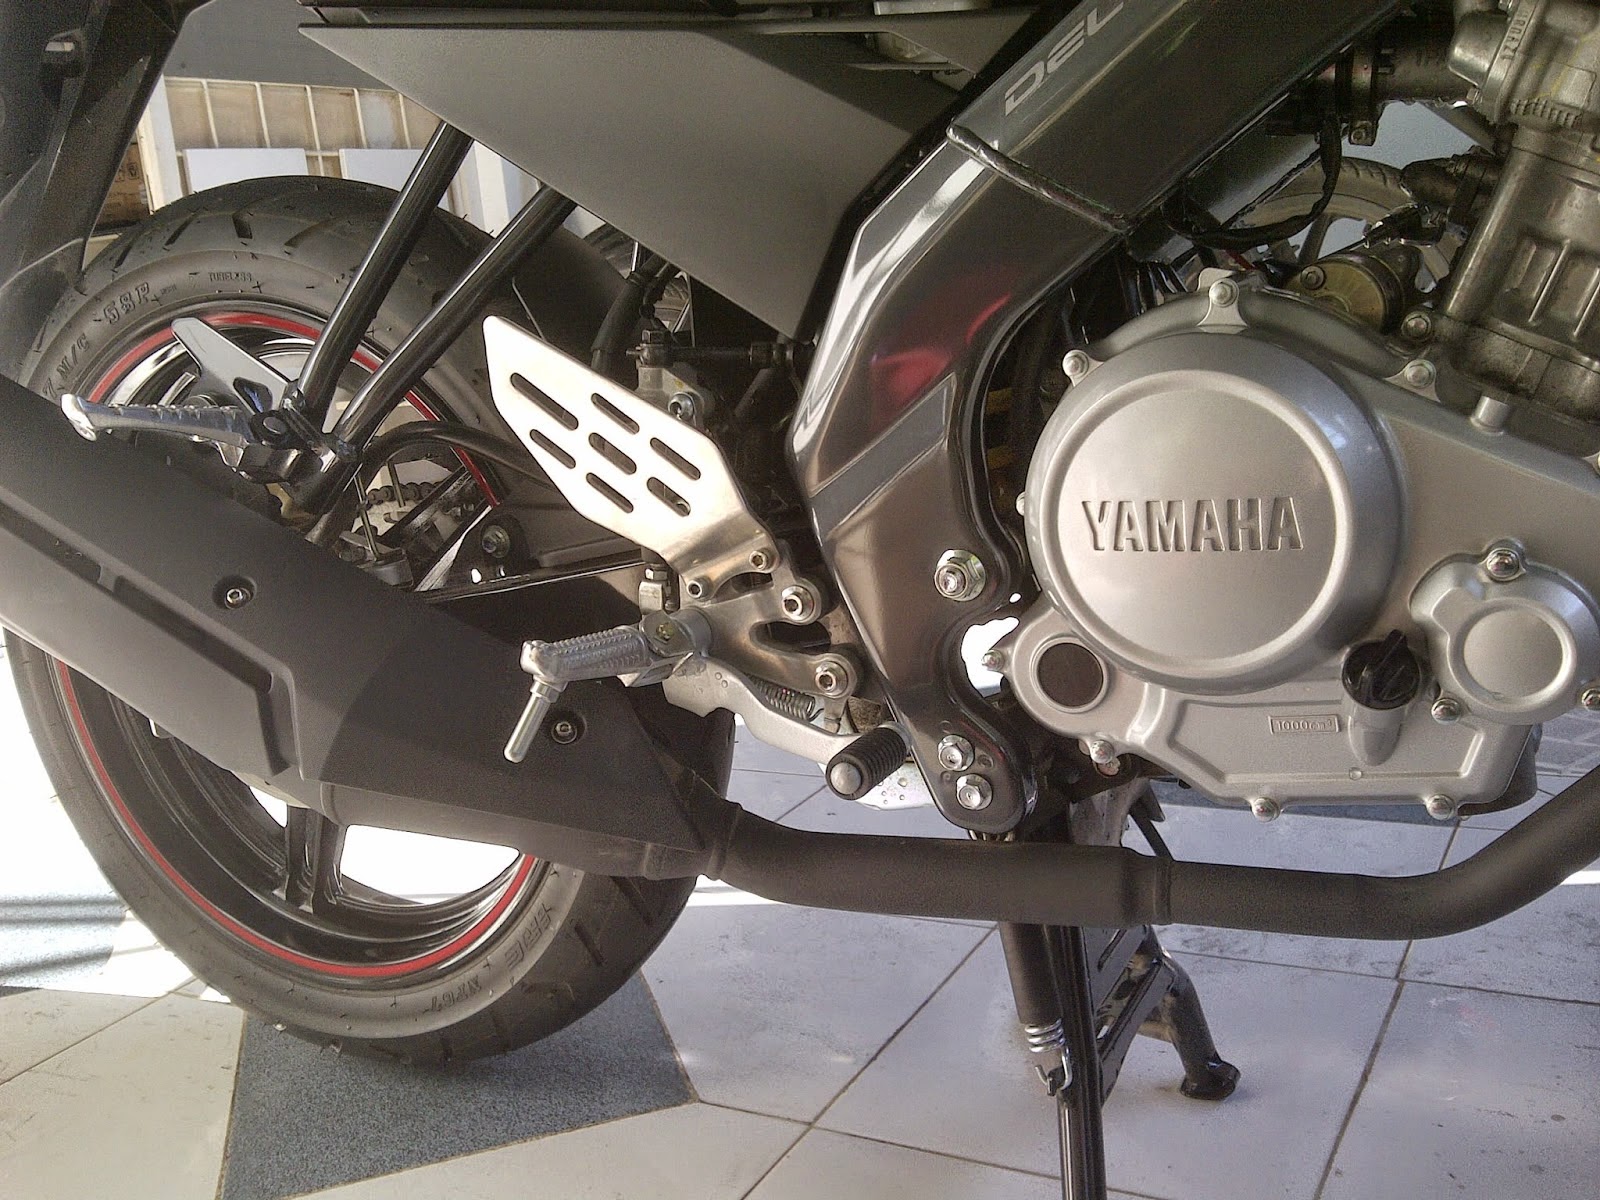 Foto Modifikasi Motor Yamaha R15